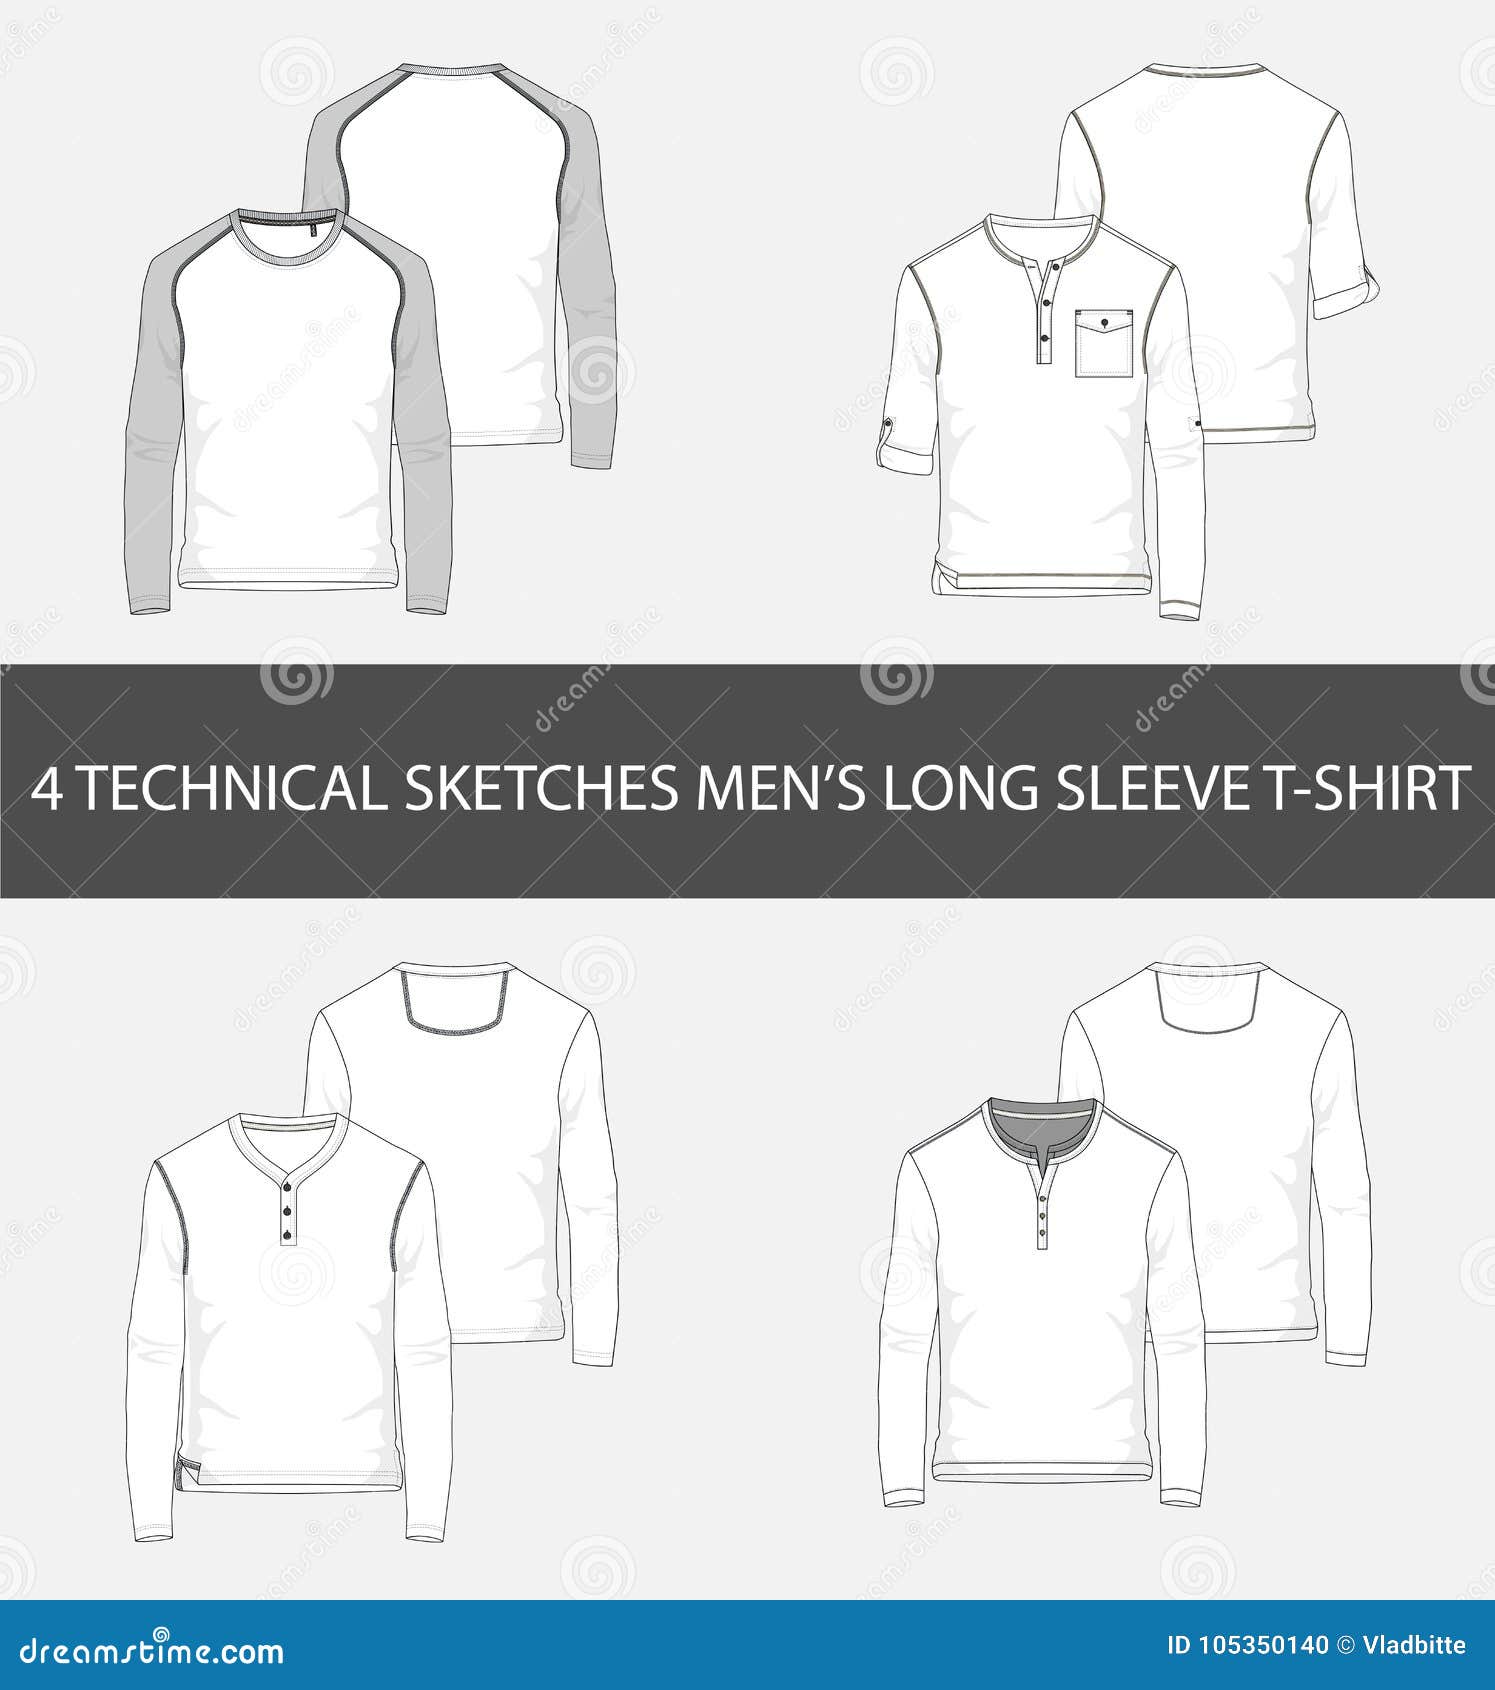 Technical Sketch Man Shirt Cliparts Stock Vector and Royalty Free  Technical Sketch Man Shirt Illustrations